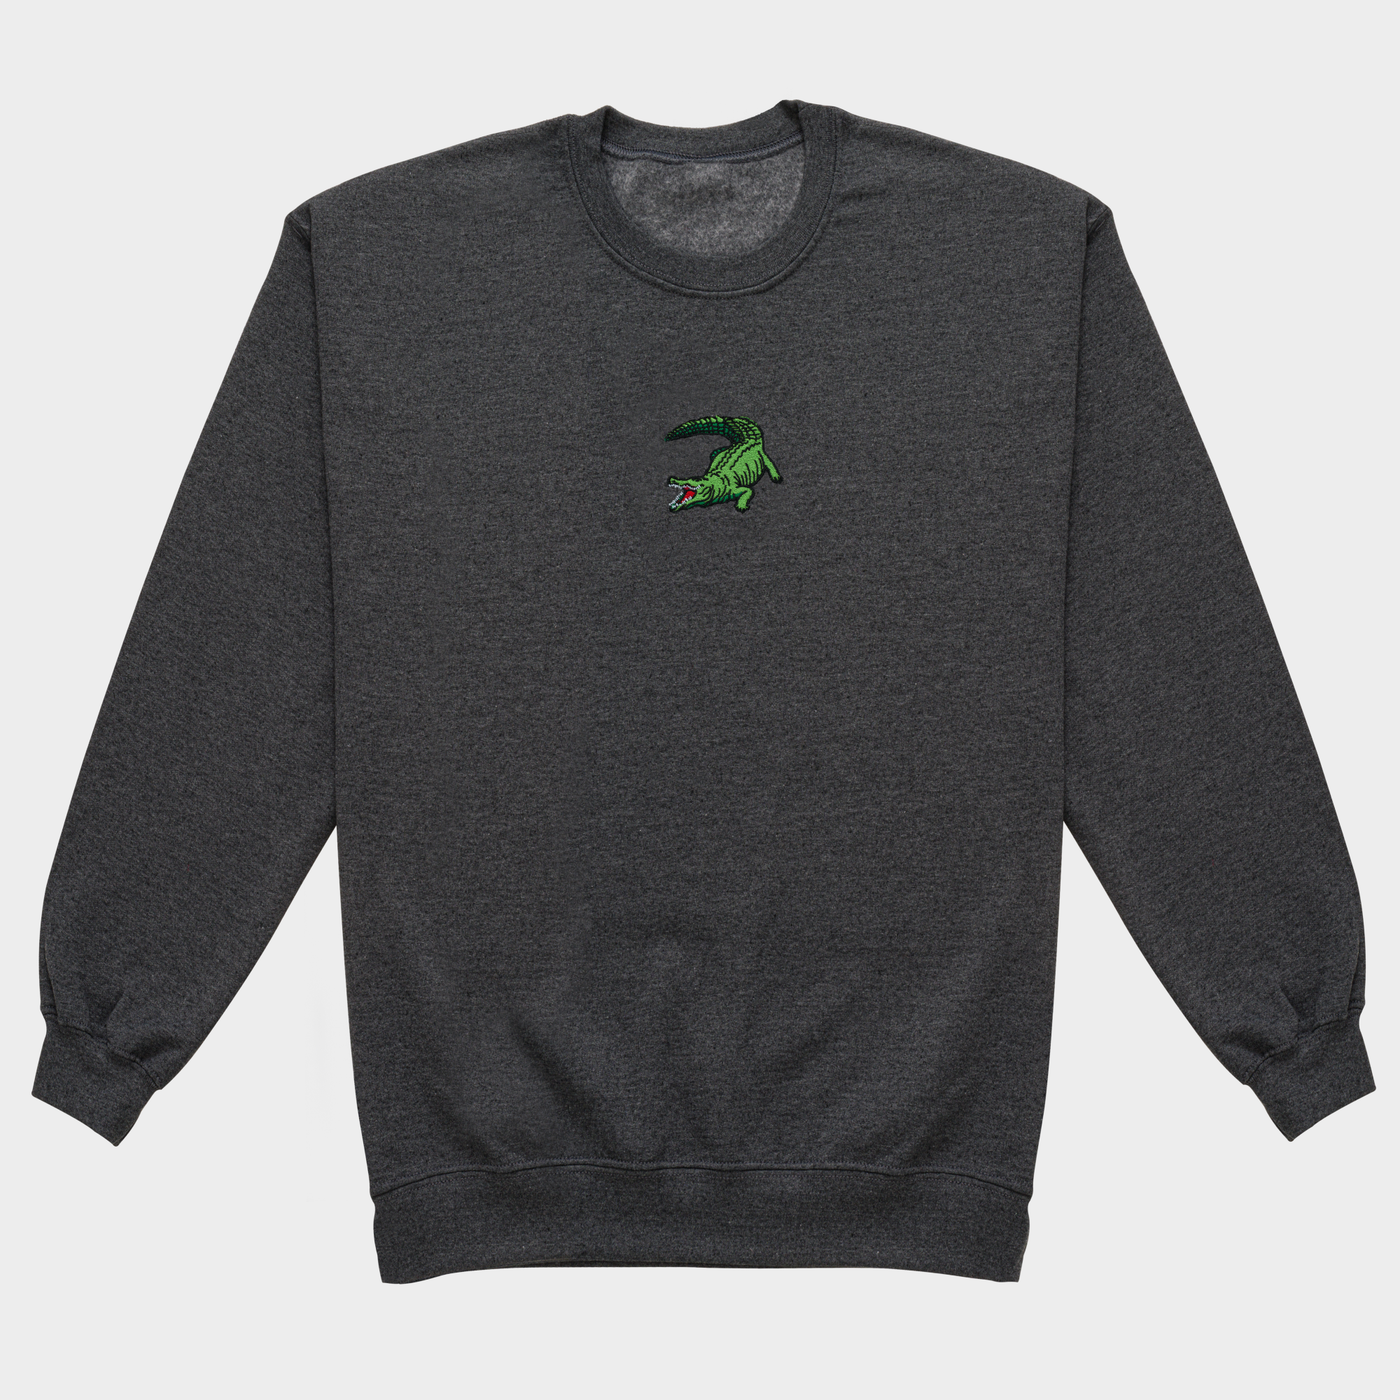 Bobby's Planet Men's Embroidered Saltwater Crocodile Sweatshirt from Australia Down Under Animals Collection in Dark Grey Heather Color#color_dark-grey-heather